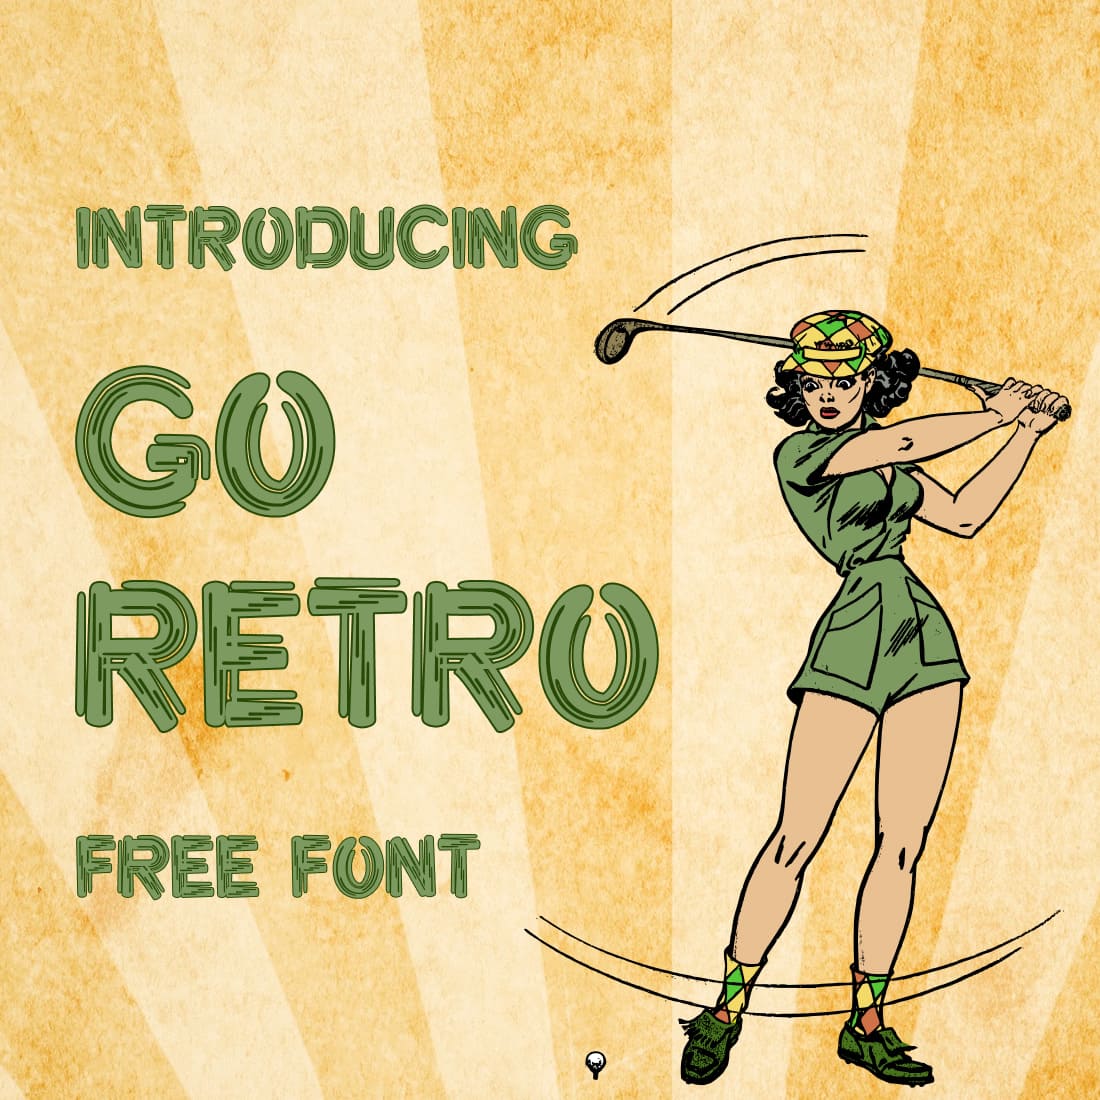 Go Retro - retro font free Cover collage image by MasterBundles.